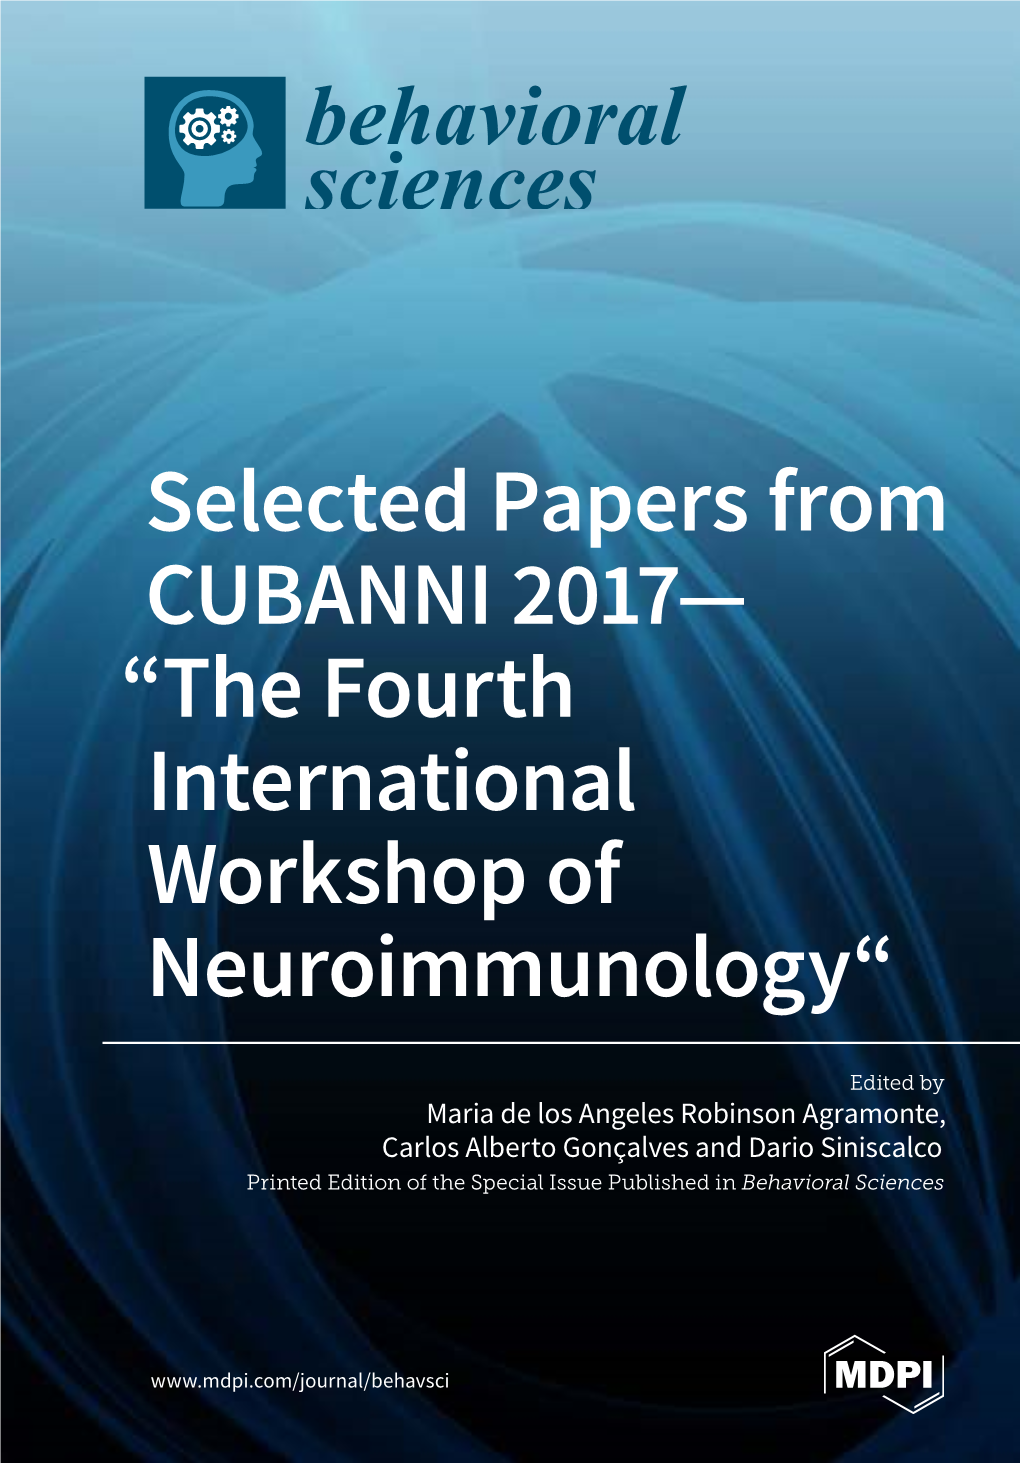 The Fourth International Workshop of Neuroimmunology“